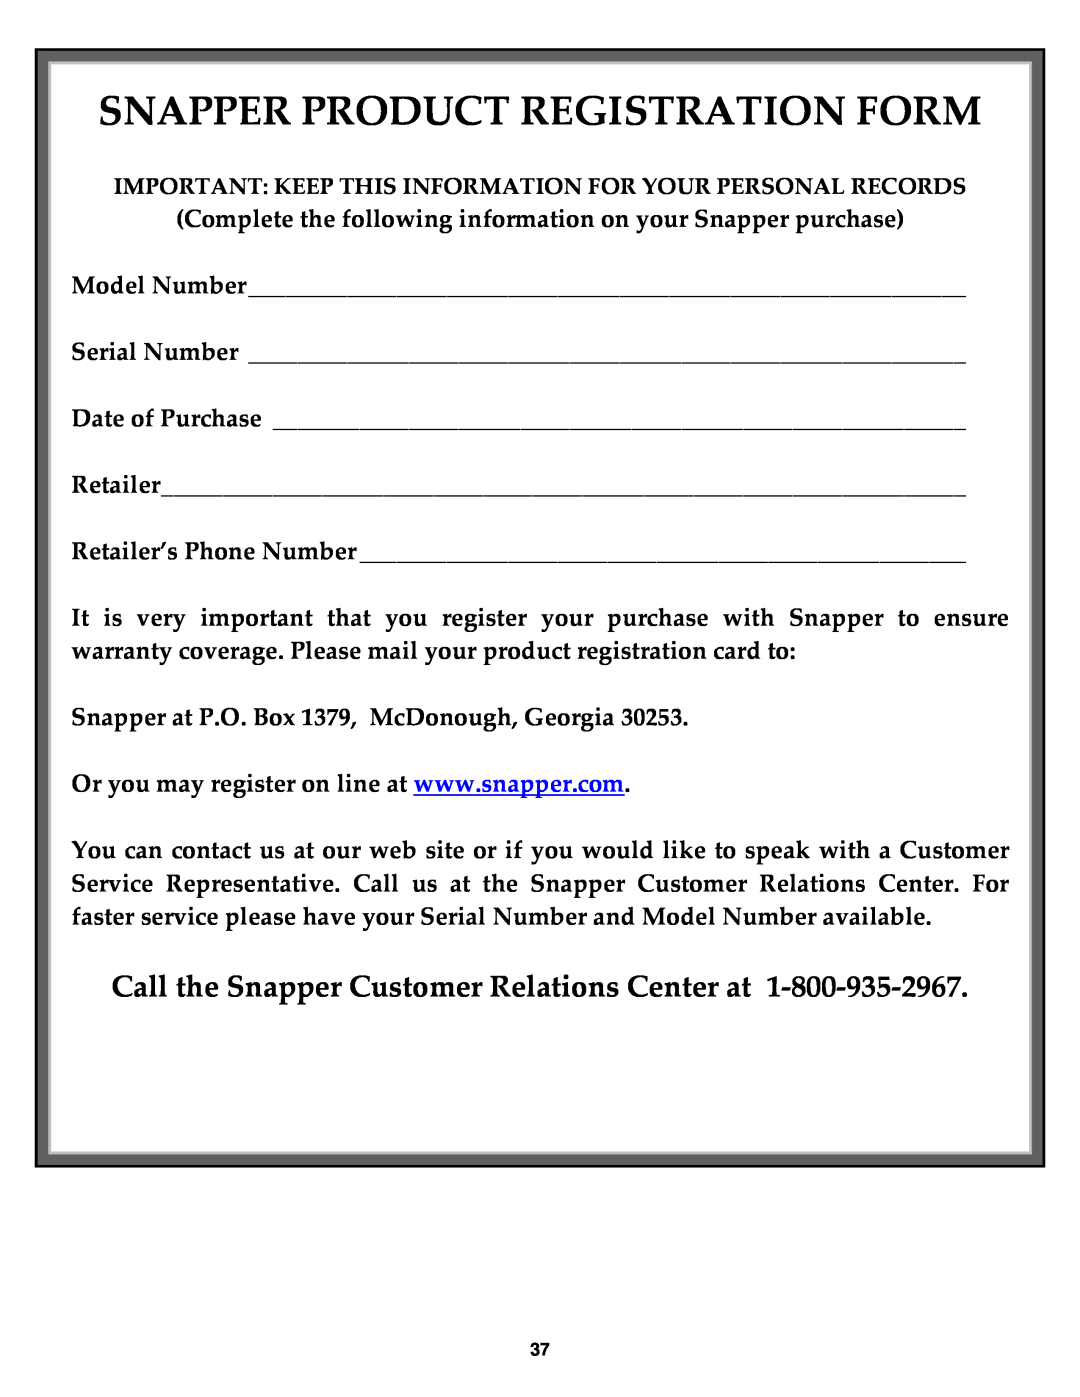 Snapper NZMJ23521KH, NZMJ25611KH Snapper Product Registration Form, Call the Snapper Customer Relations Center at 